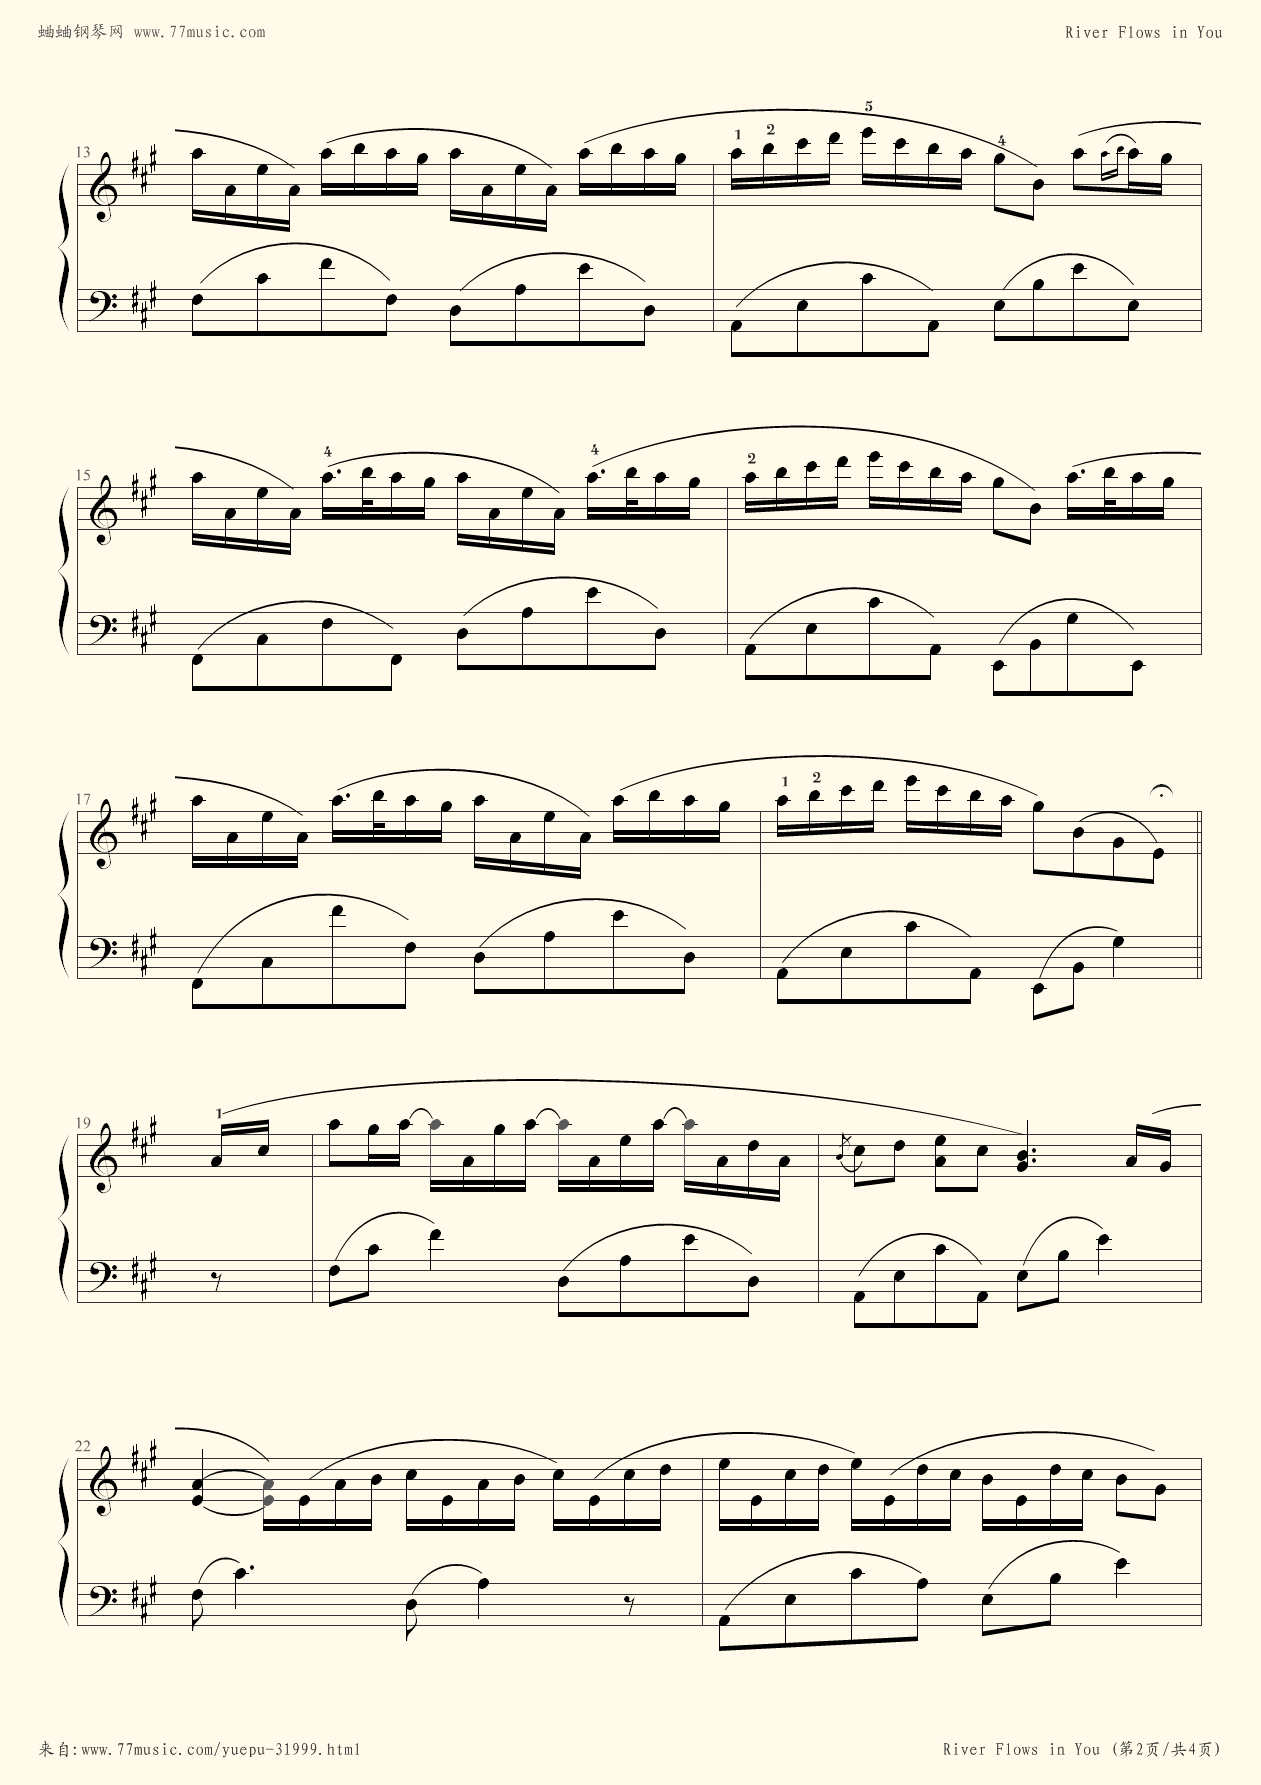 River Flows In You - Yiruma - Flash Version2 Piano Sheet Music Free